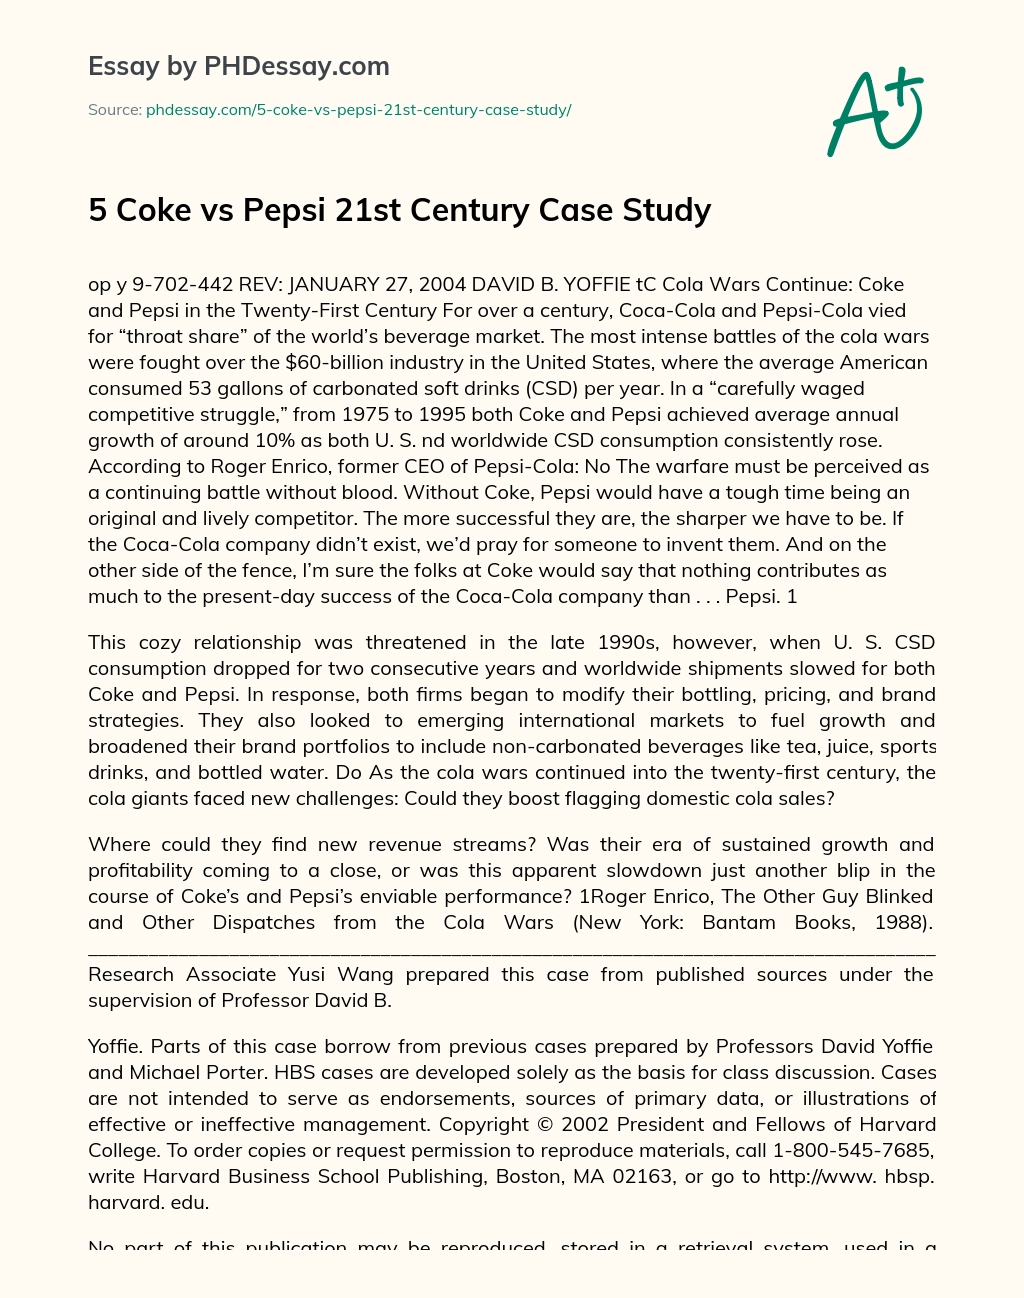 5 Coke vs Pepsi 21st Century Case Study essay